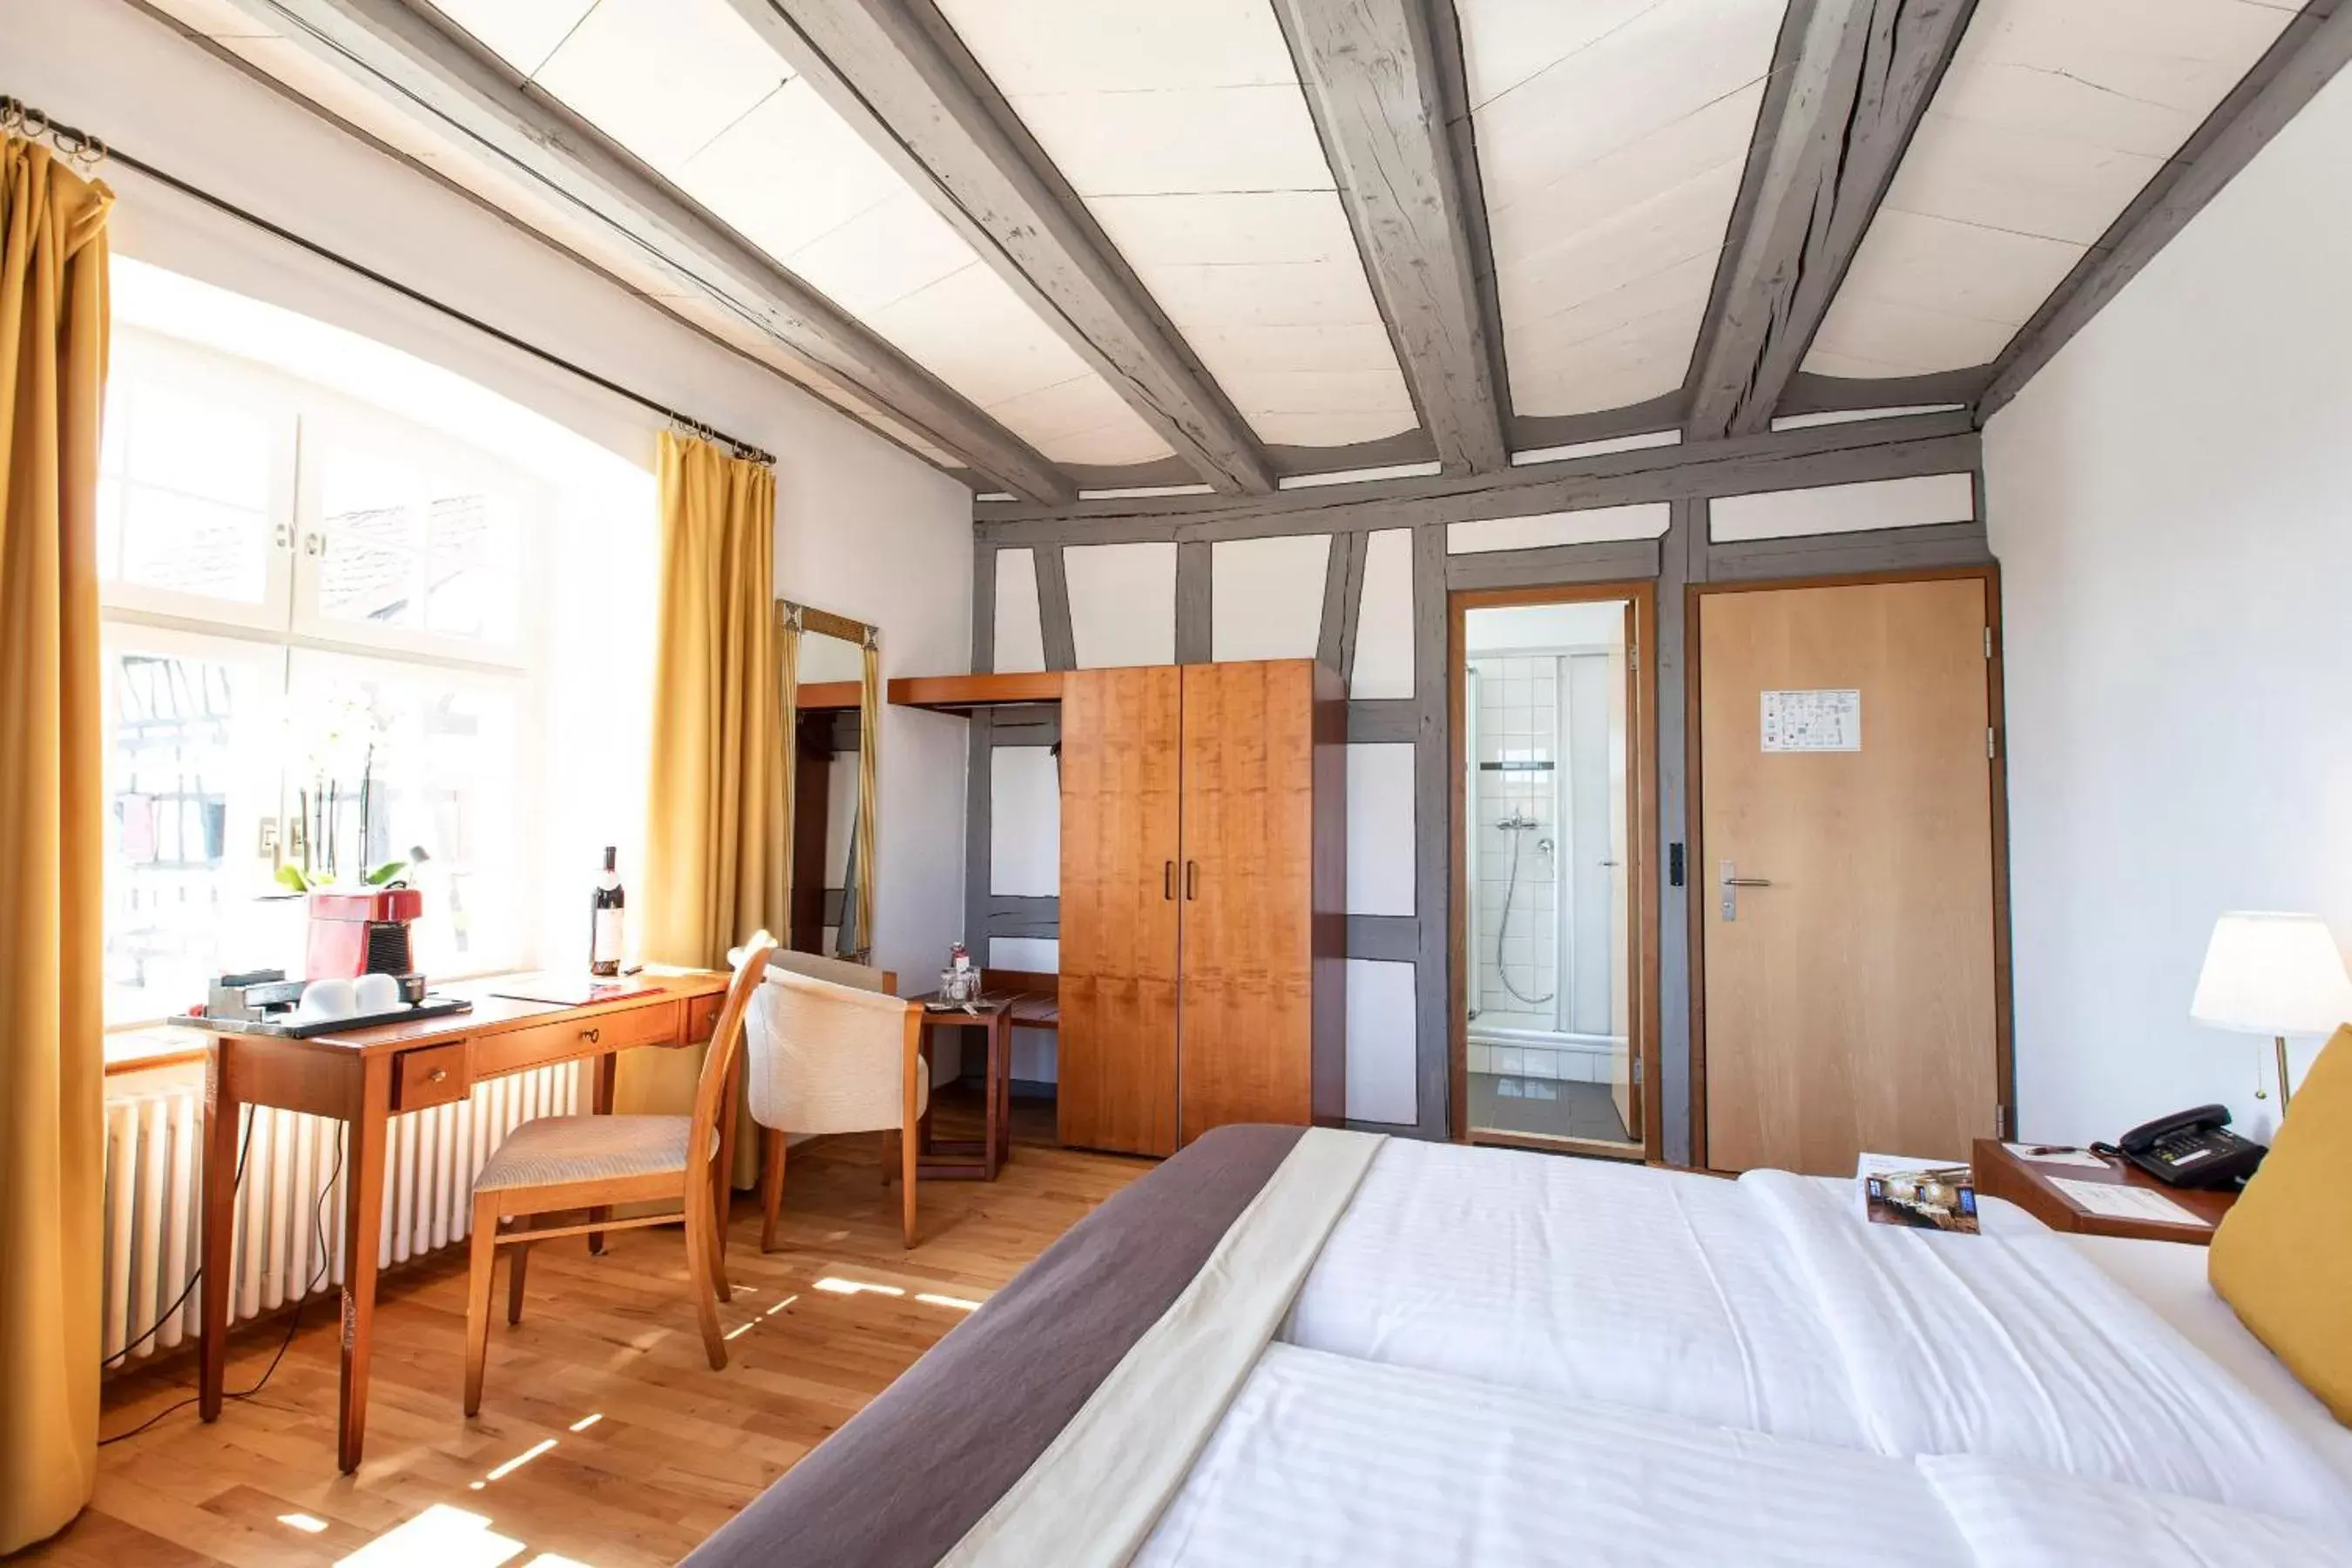 Photo of the whole room in Hotel de Charme Römerhof